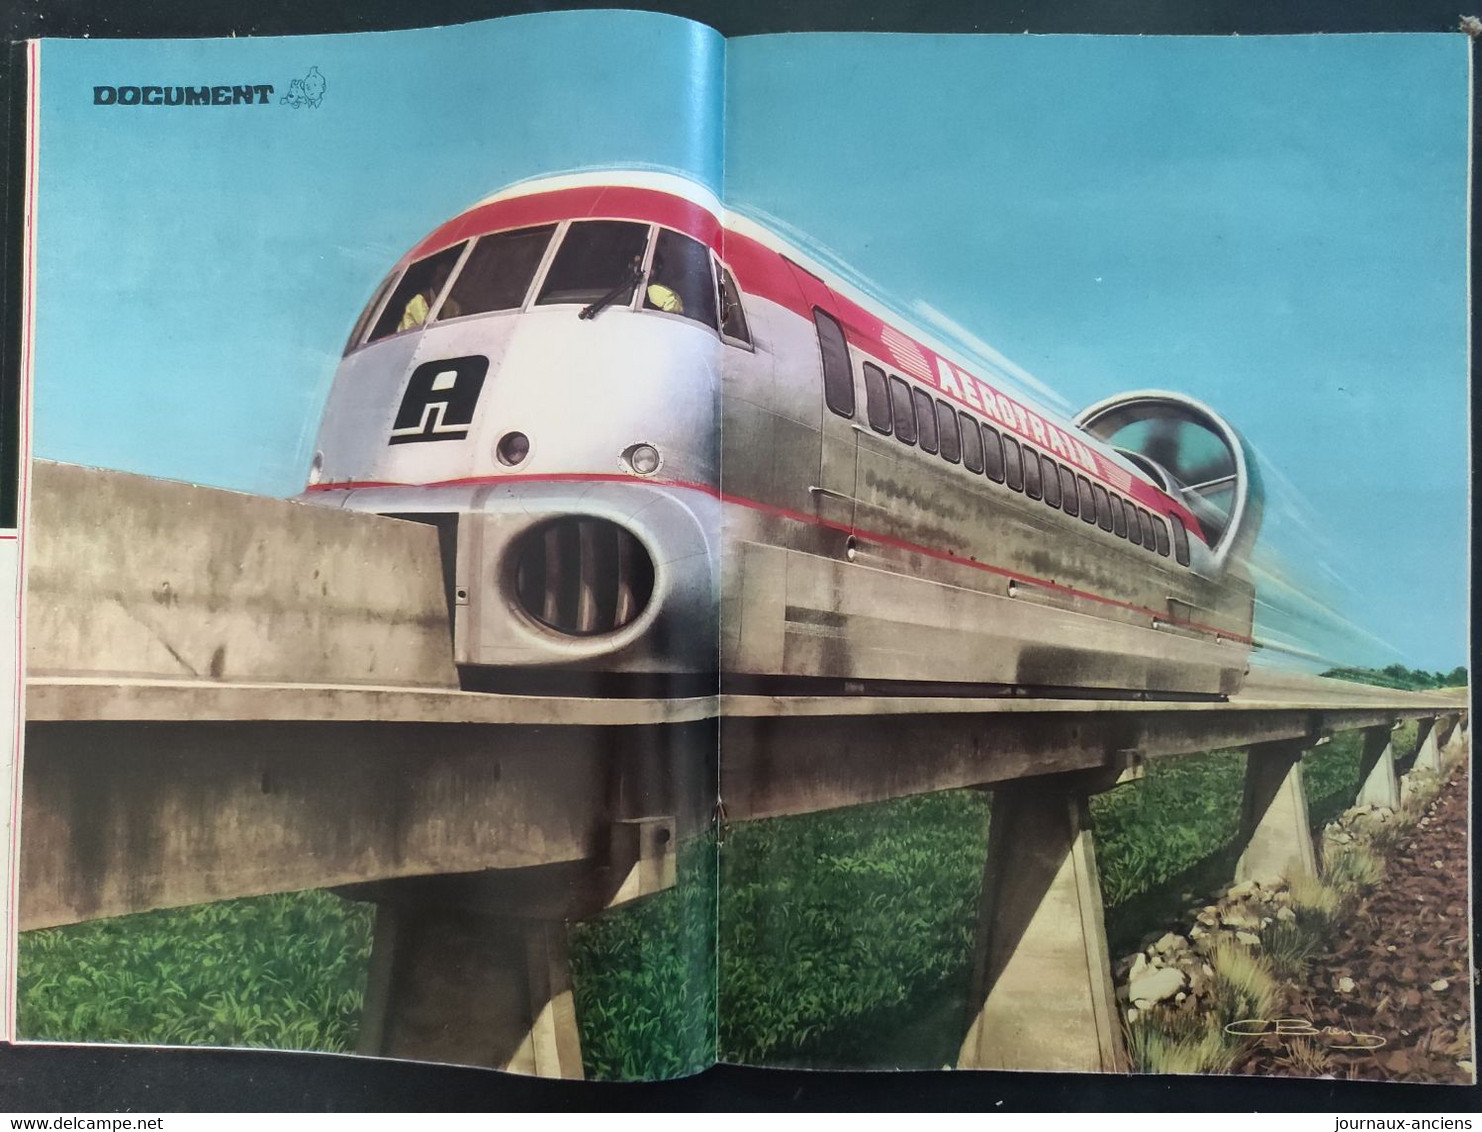 1971 Journal TINTIN N° 23  - Supplément BELGE  - L'AEROTRAIN I 80 - LA BELGIQUE ET LES RAILS - Tintin